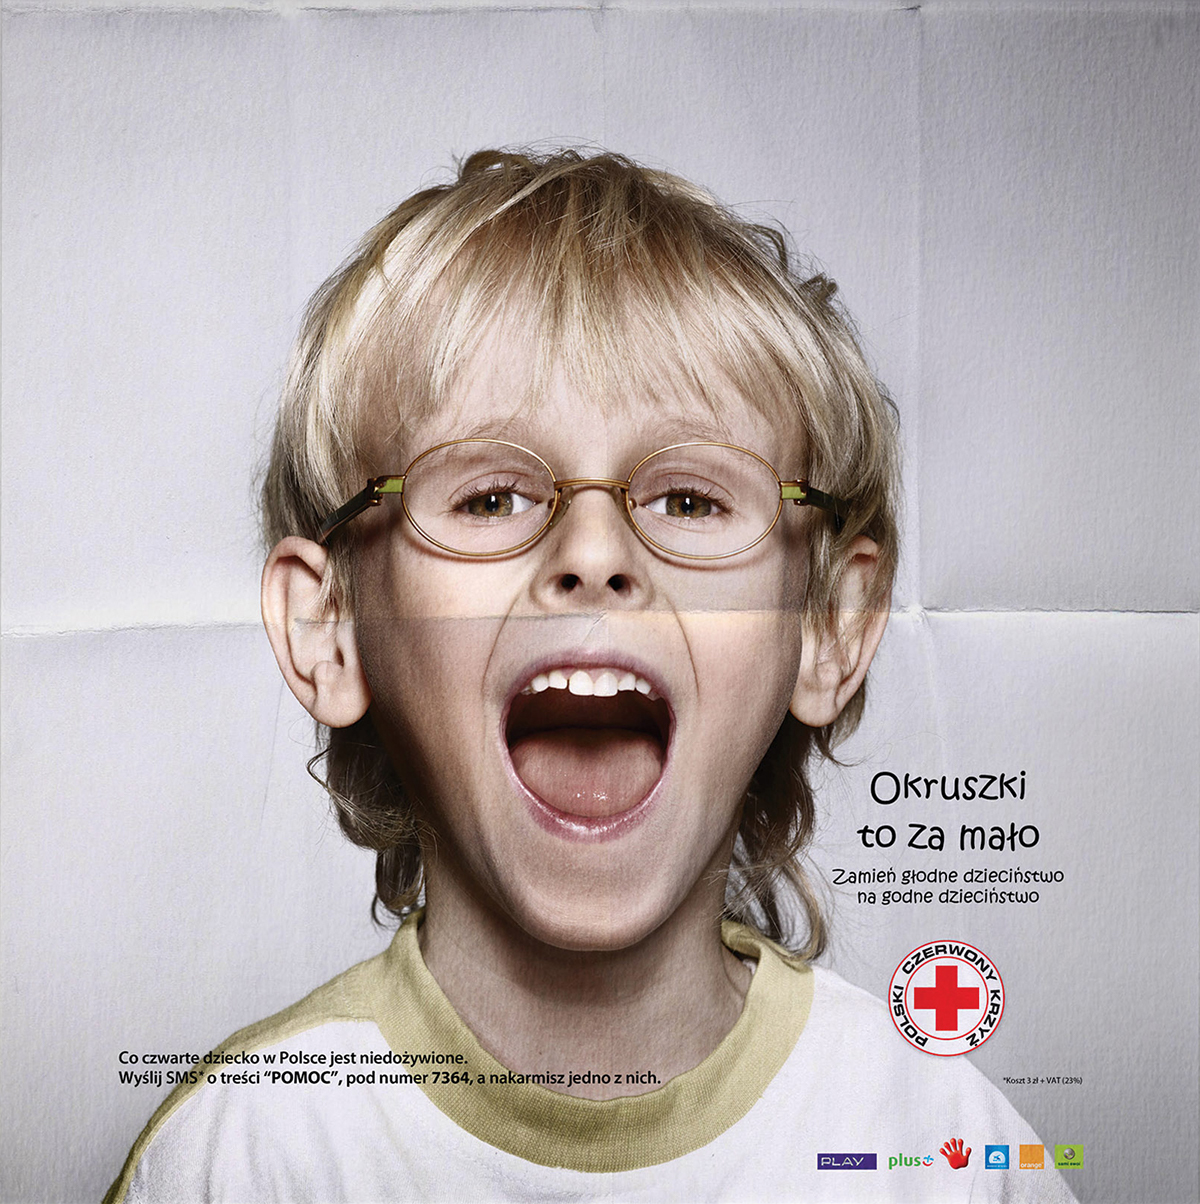 Adobe Portfolio Red Cross crumbs napkin children childhood Hungry charity polish Advertising 